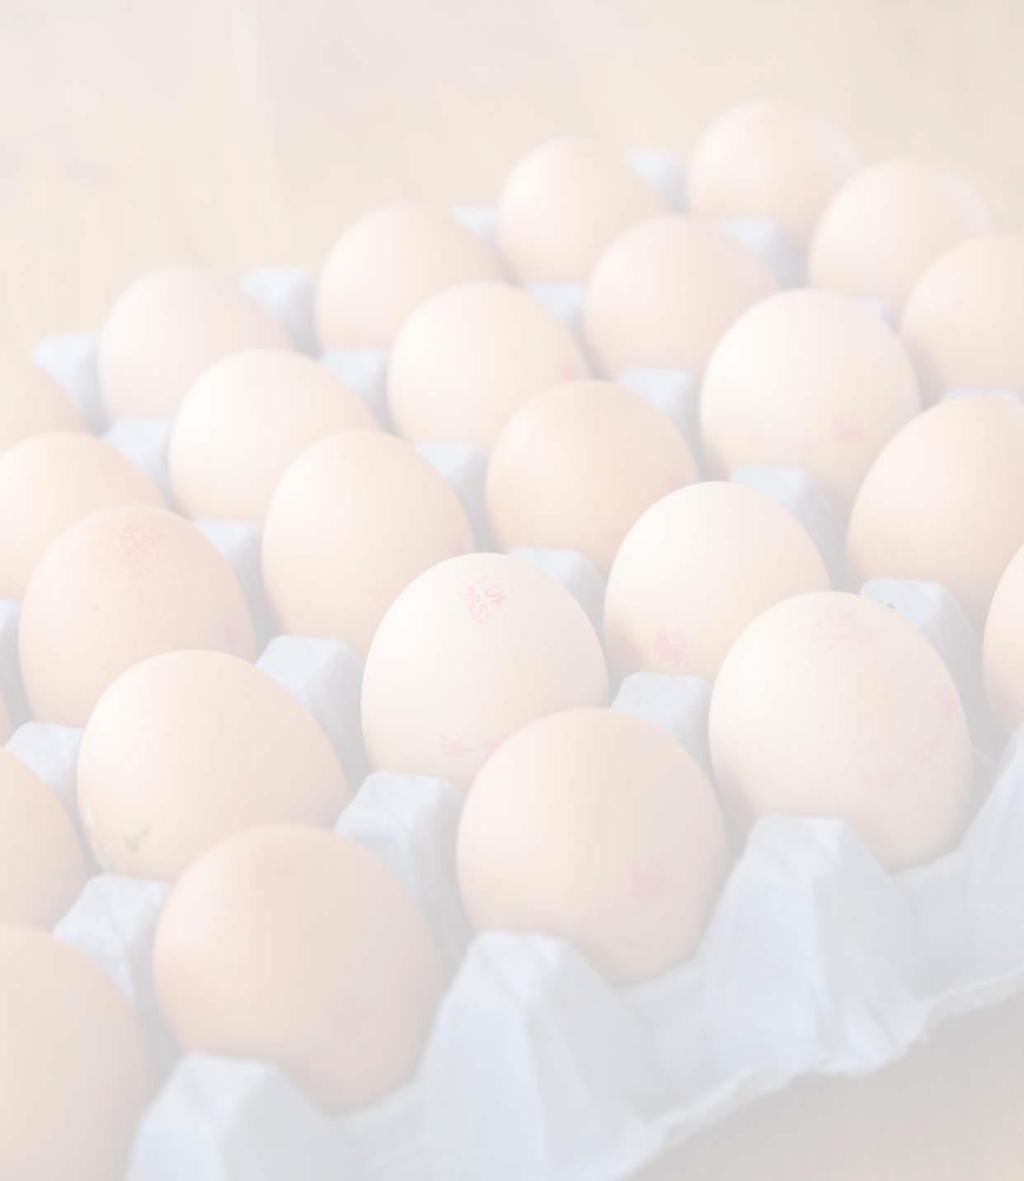 Dairy Eggs Large Free Range Eggs 12 x 30 POR Medium Eggs 12 x 30 POR Large Free Range Egg Tray x 30 POR Medium Eggs Tray x 30 POR Duck Eggs x 12 6.